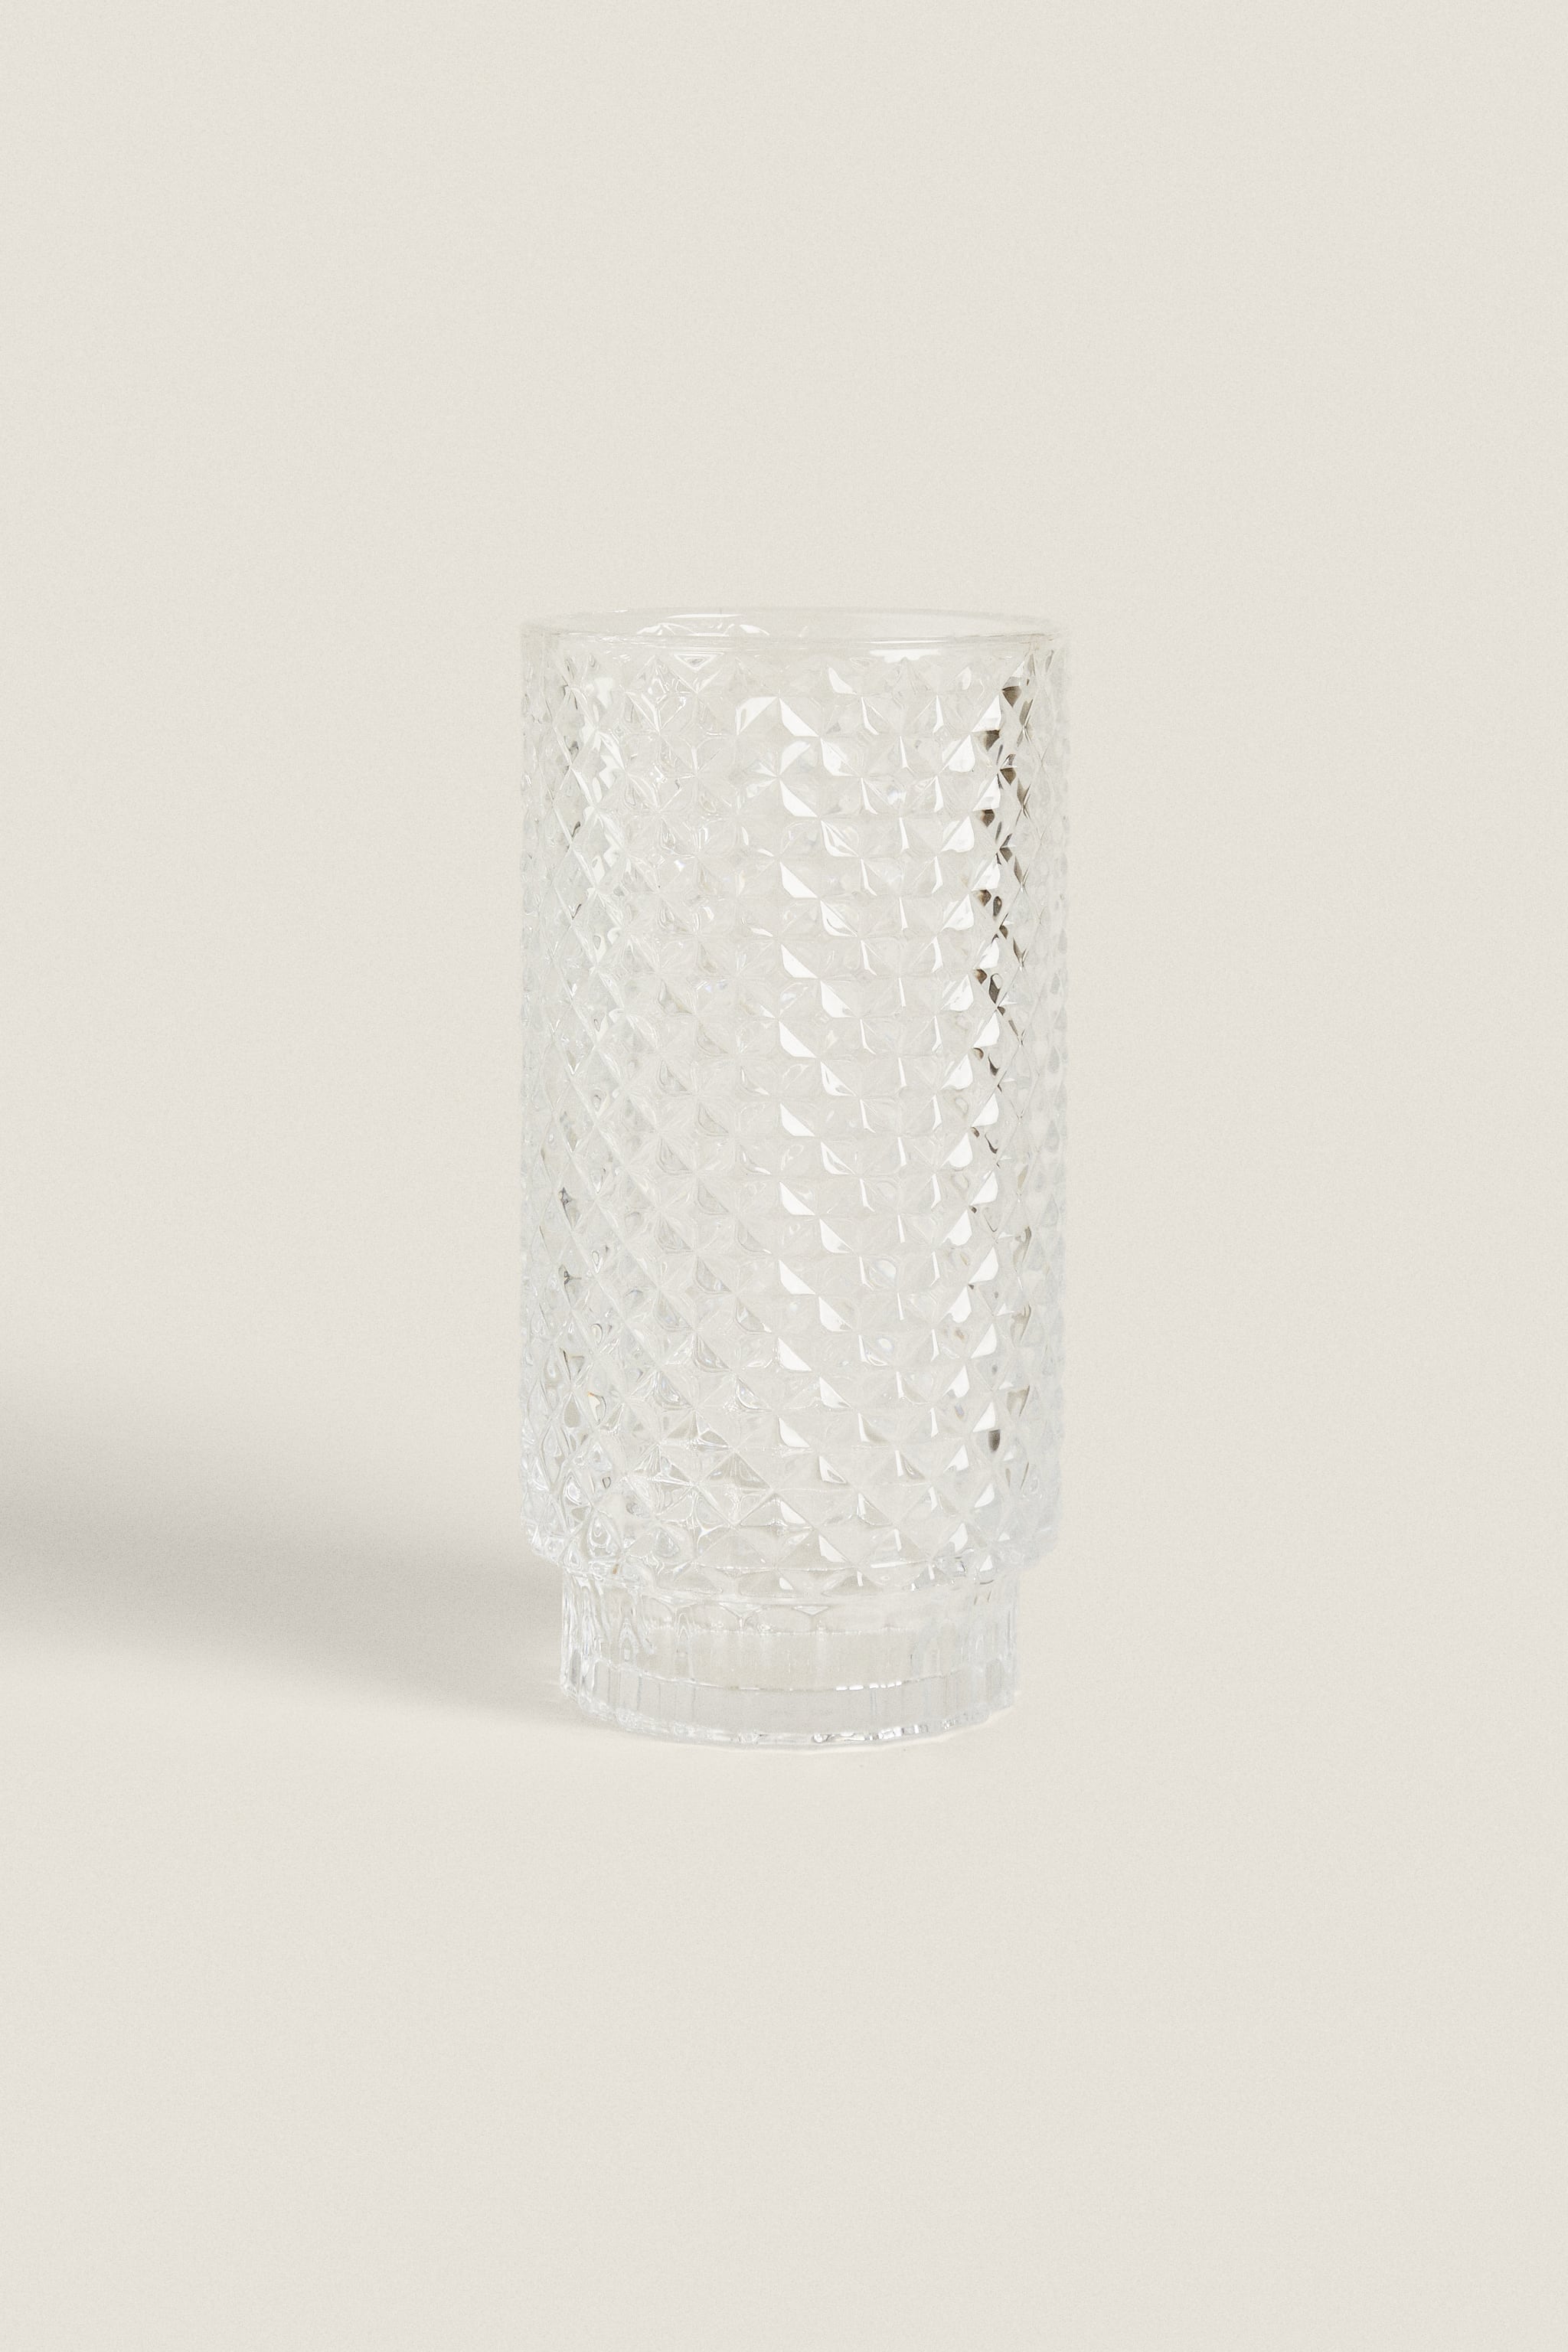 RAISED-DESIGN GLASS VASE